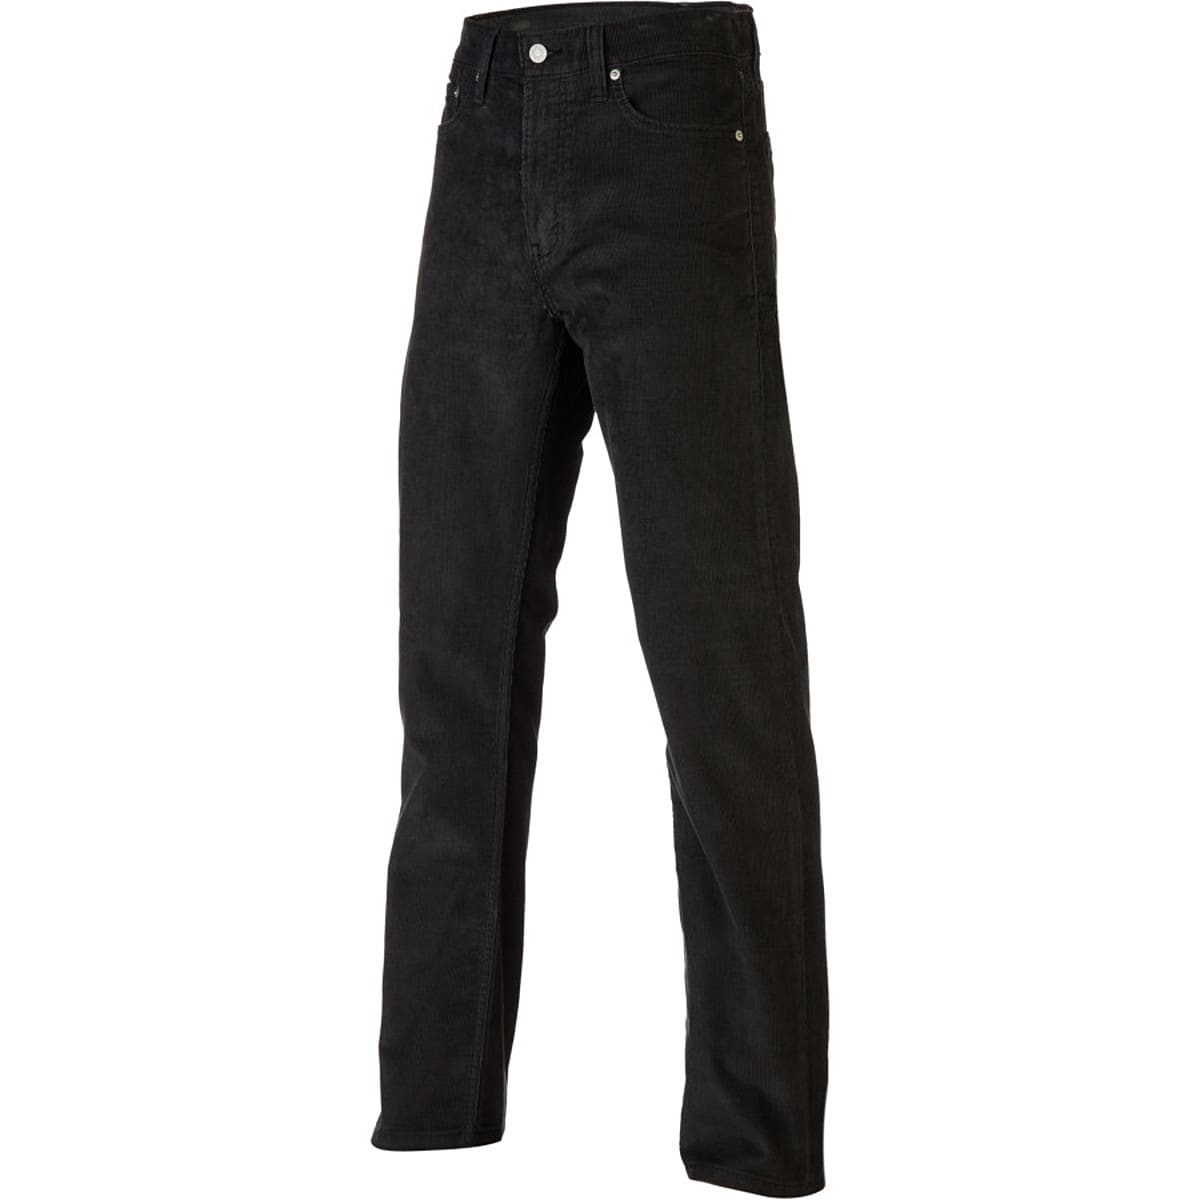 Levi's 513 Corduroy Pants - Men's - Clothing